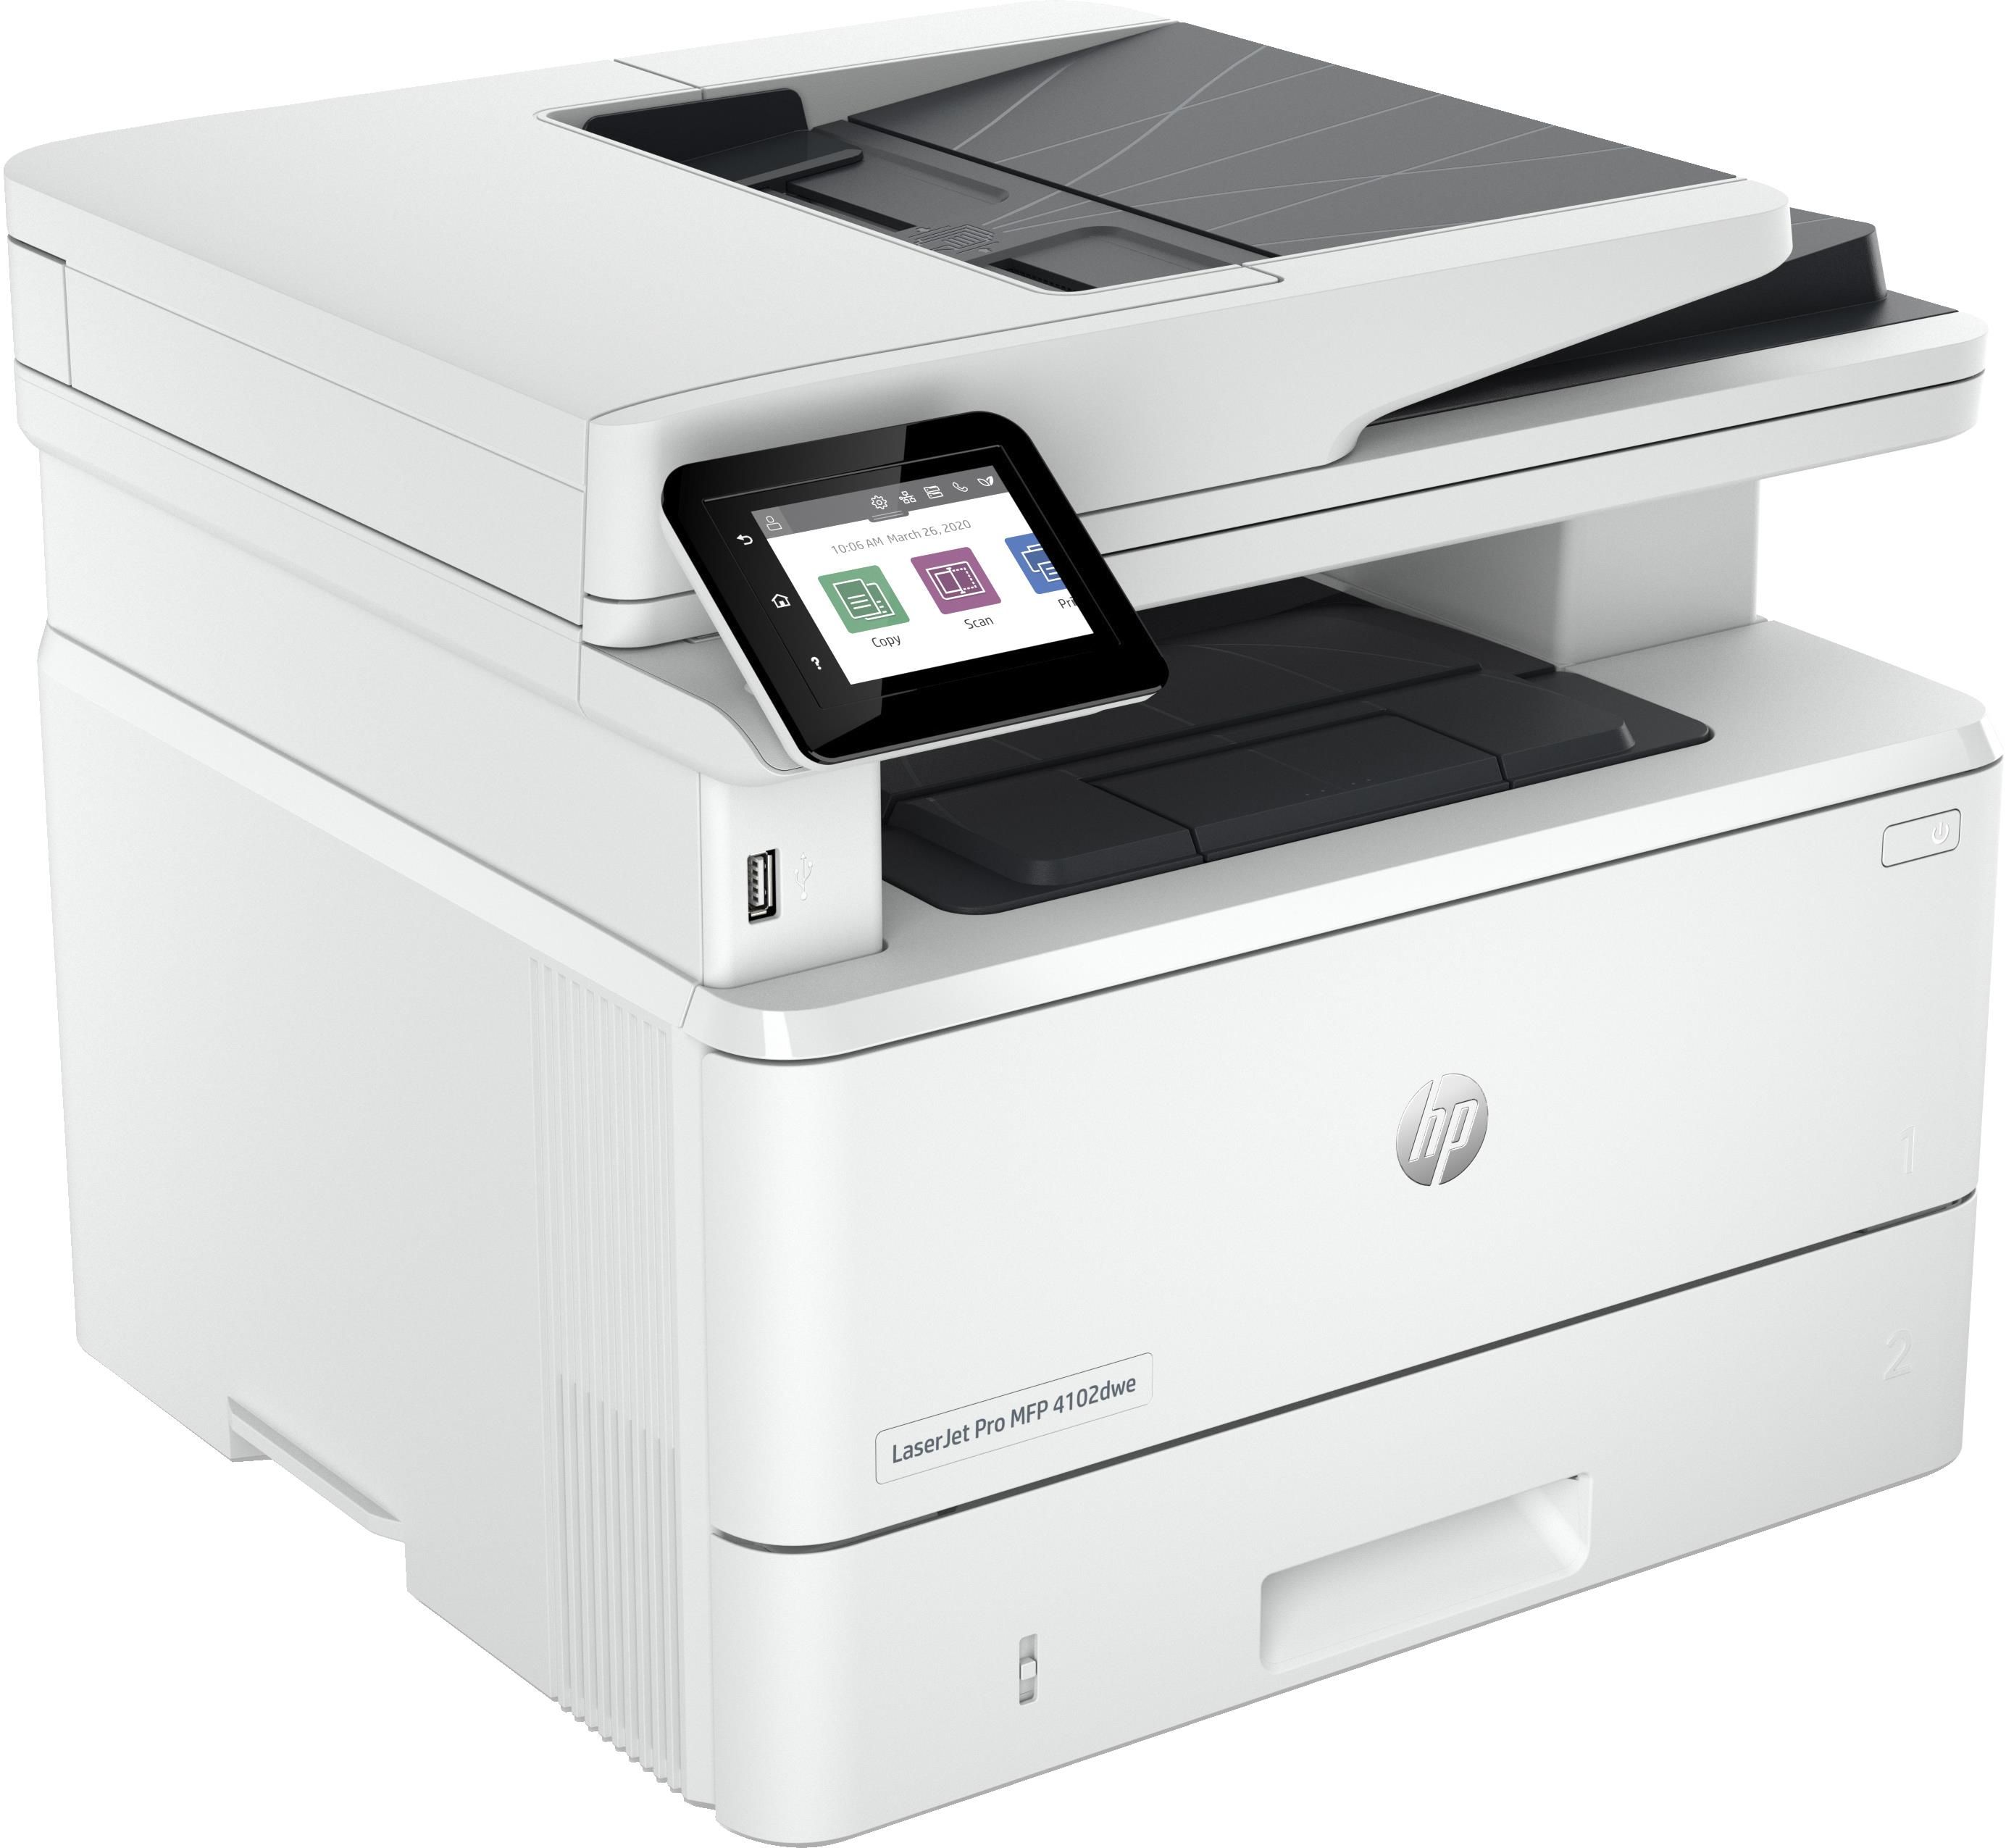 HP 4102dwe LaserJet Pro Stampante Multifunzione Bianco e